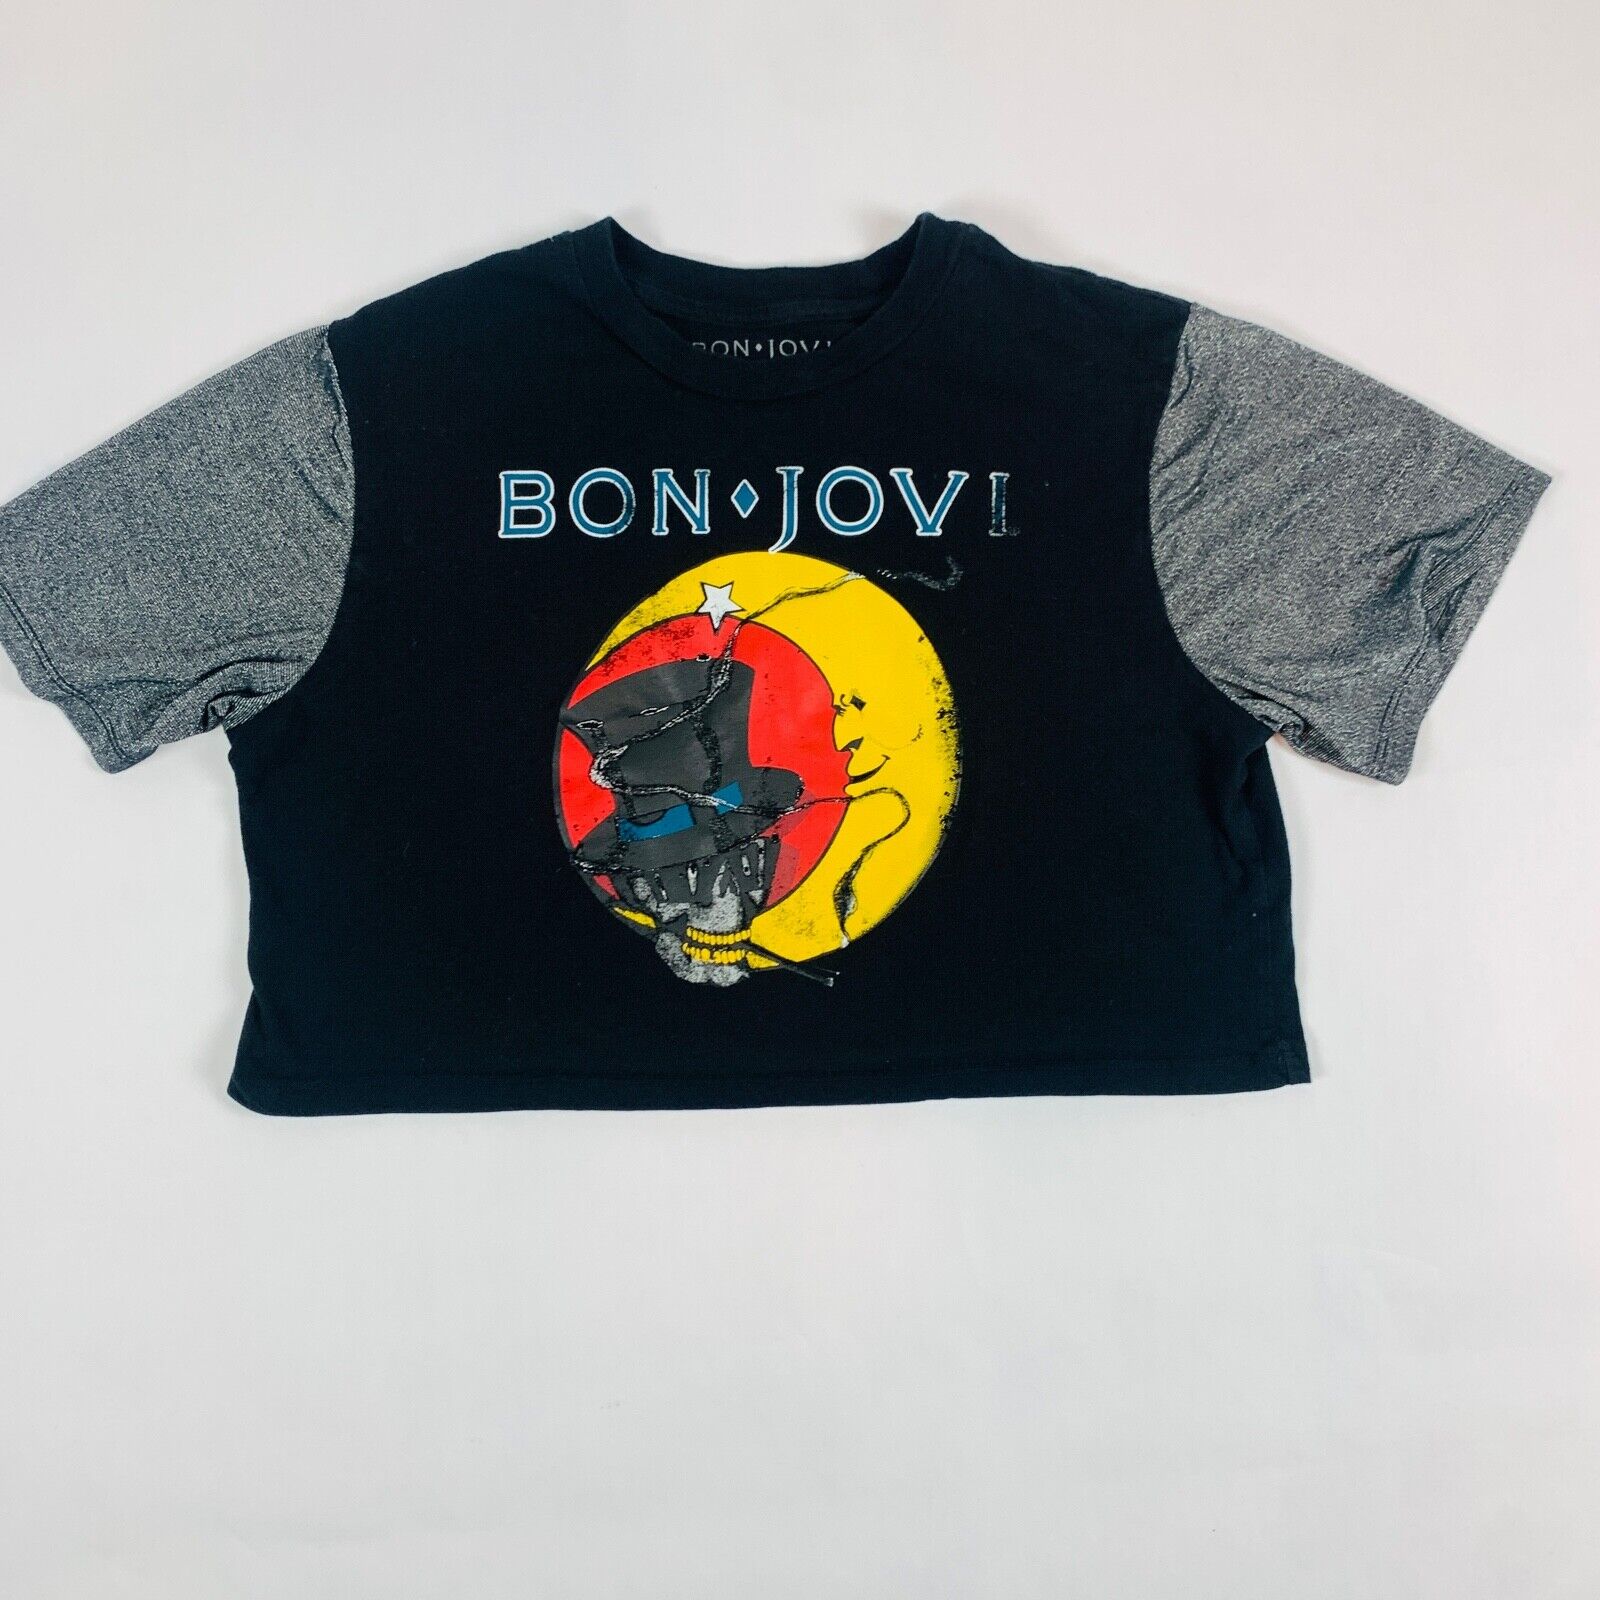 Bon Jovi 2017 American Tour 1987 Concert Half Shirt Womens Size Large Black